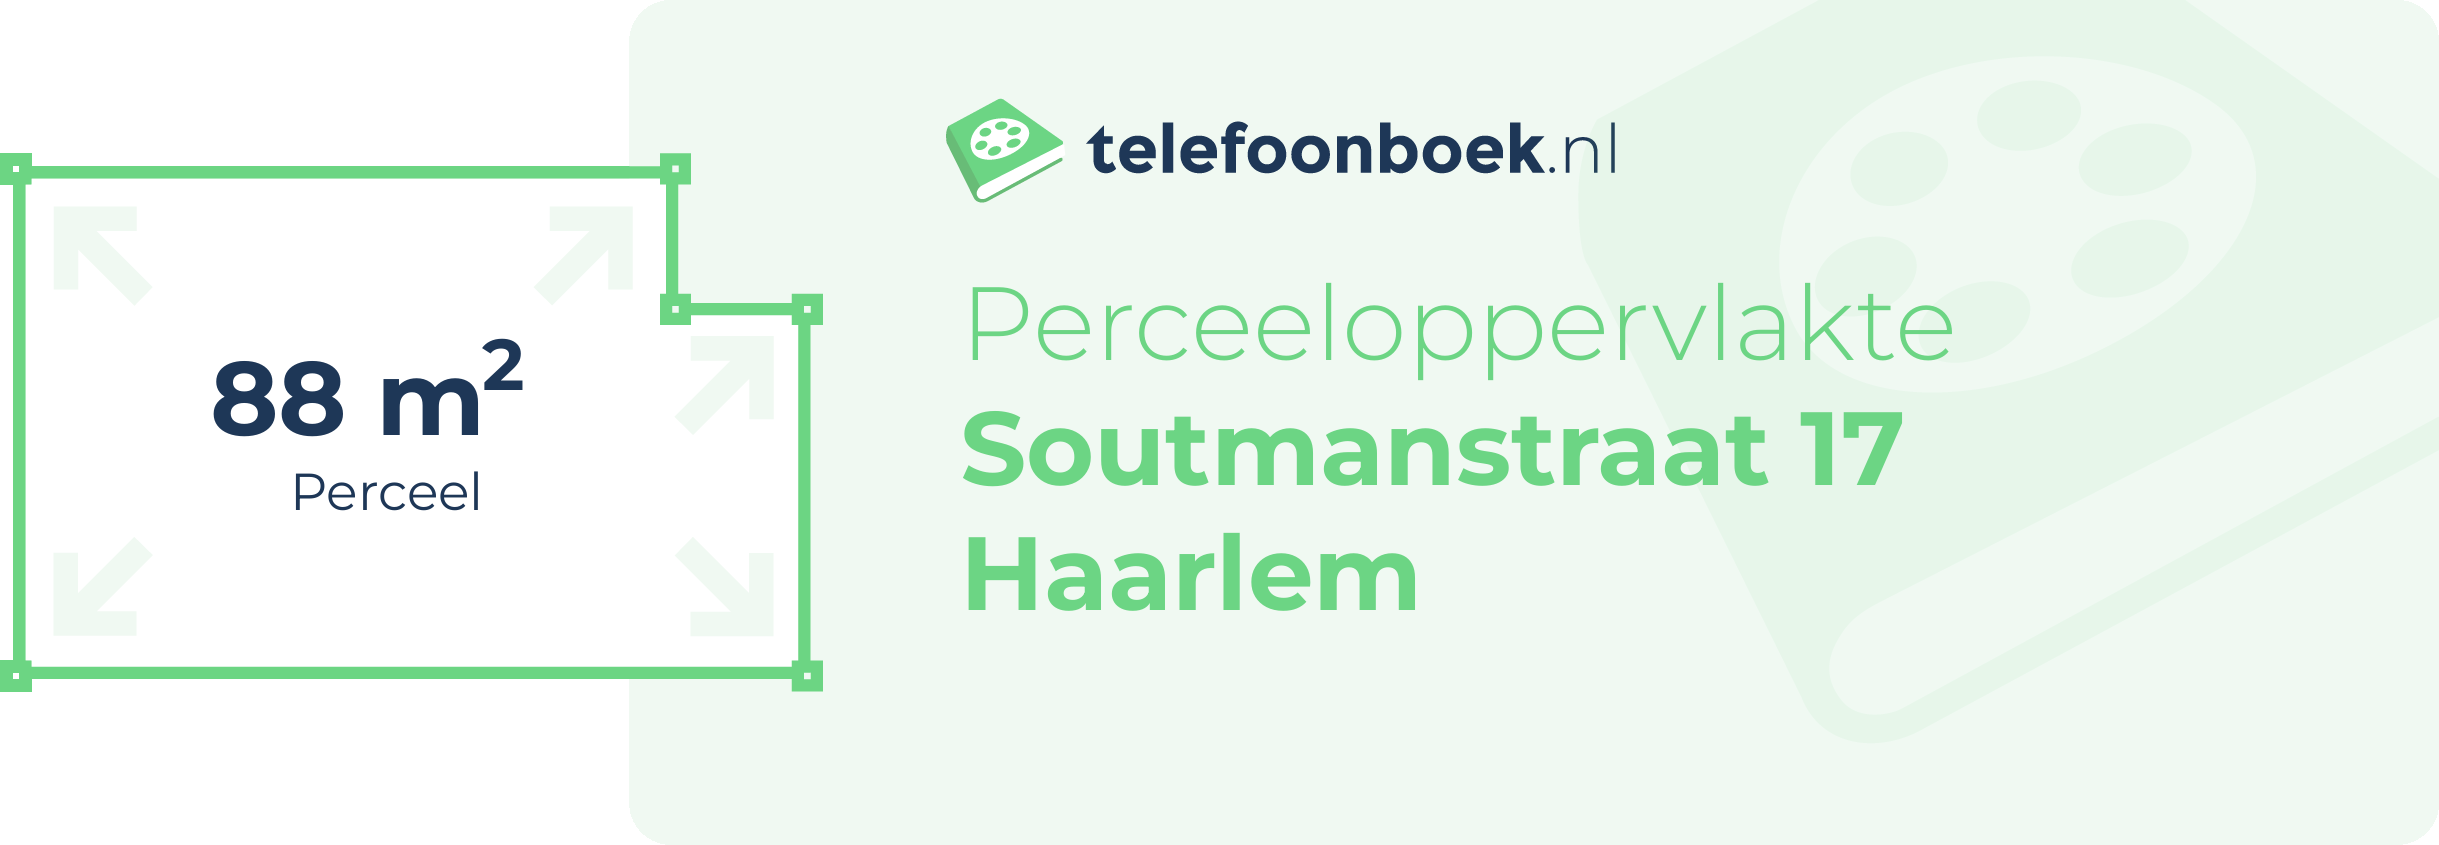 Perceeloppervlakte Soutmanstraat 17 Haarlem